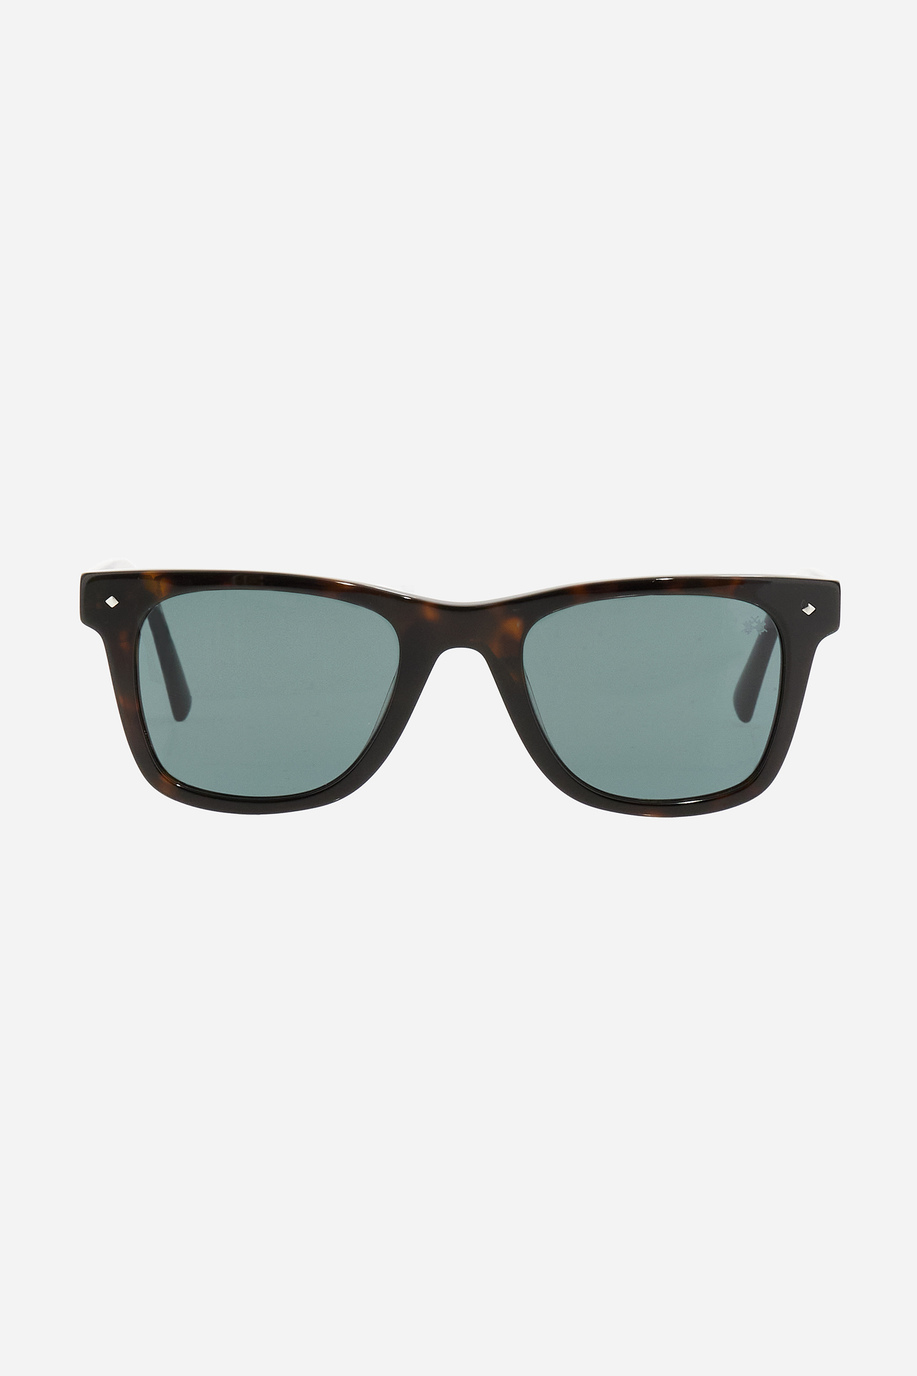 Square model men's sunglasses - Accessories | La Martina - Official Online Shop